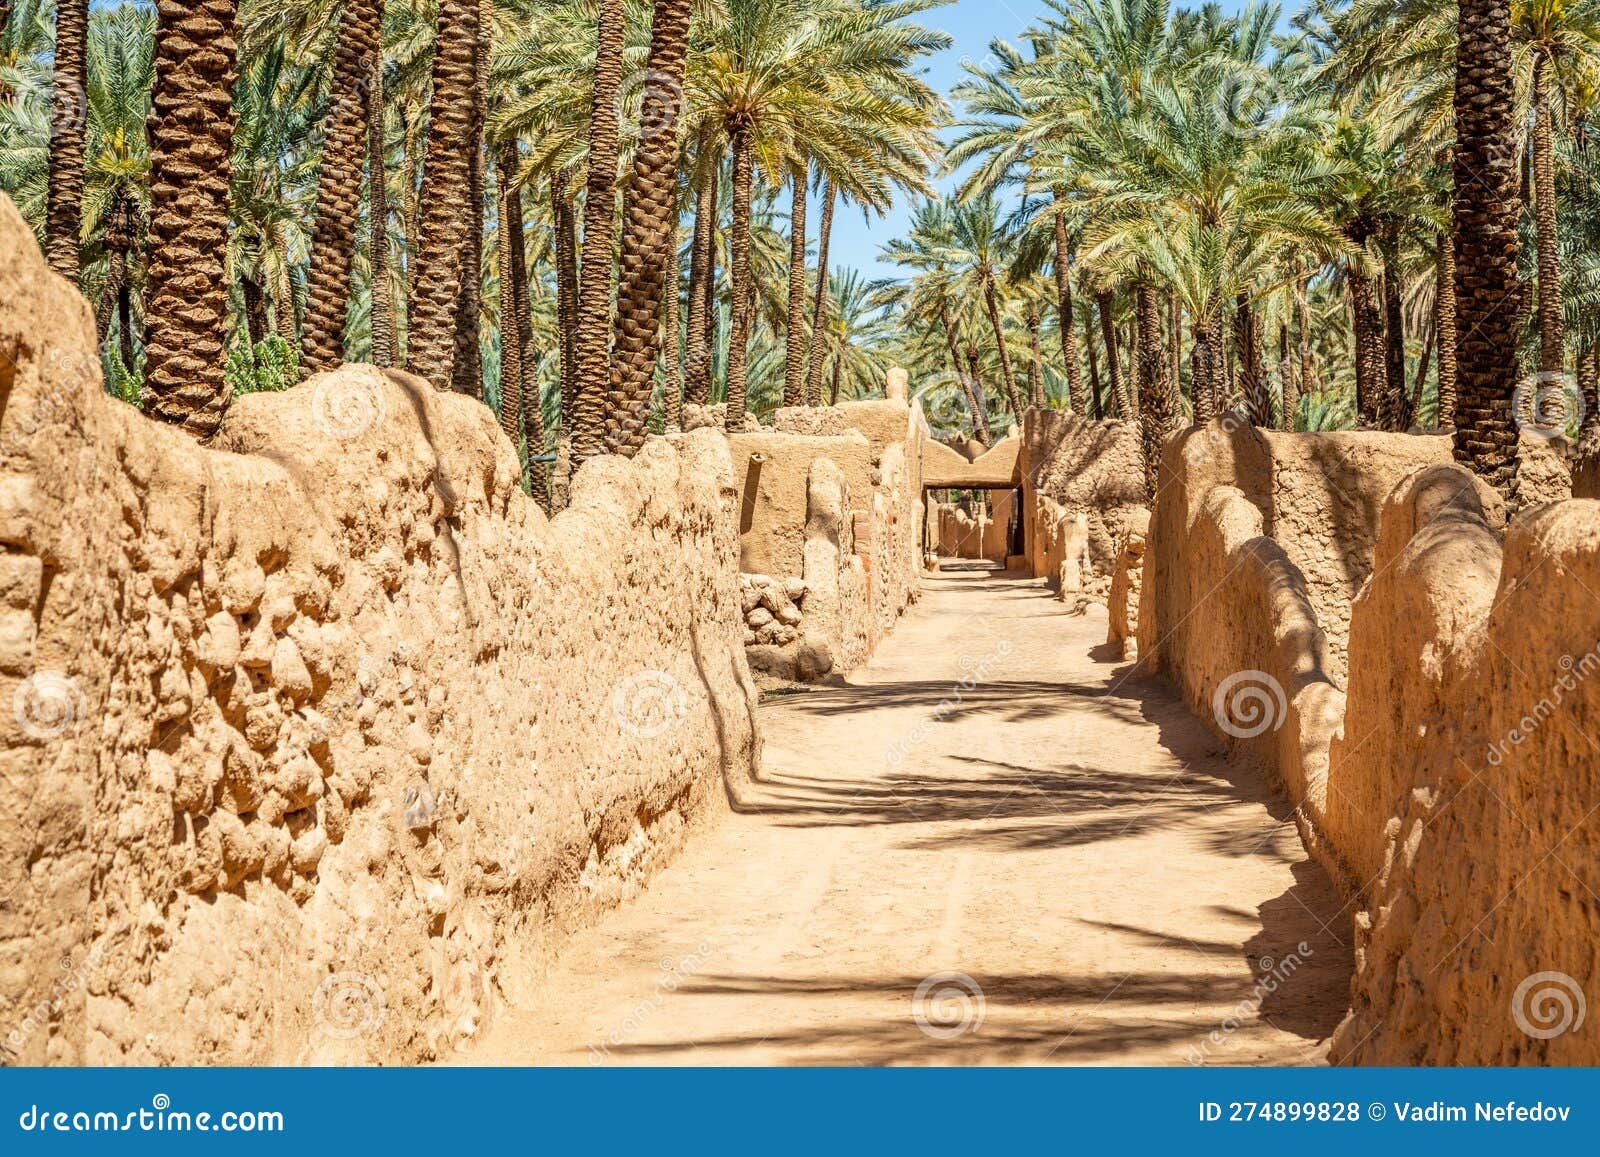 al ula ruined old town street with palms along the road, saudi arabia